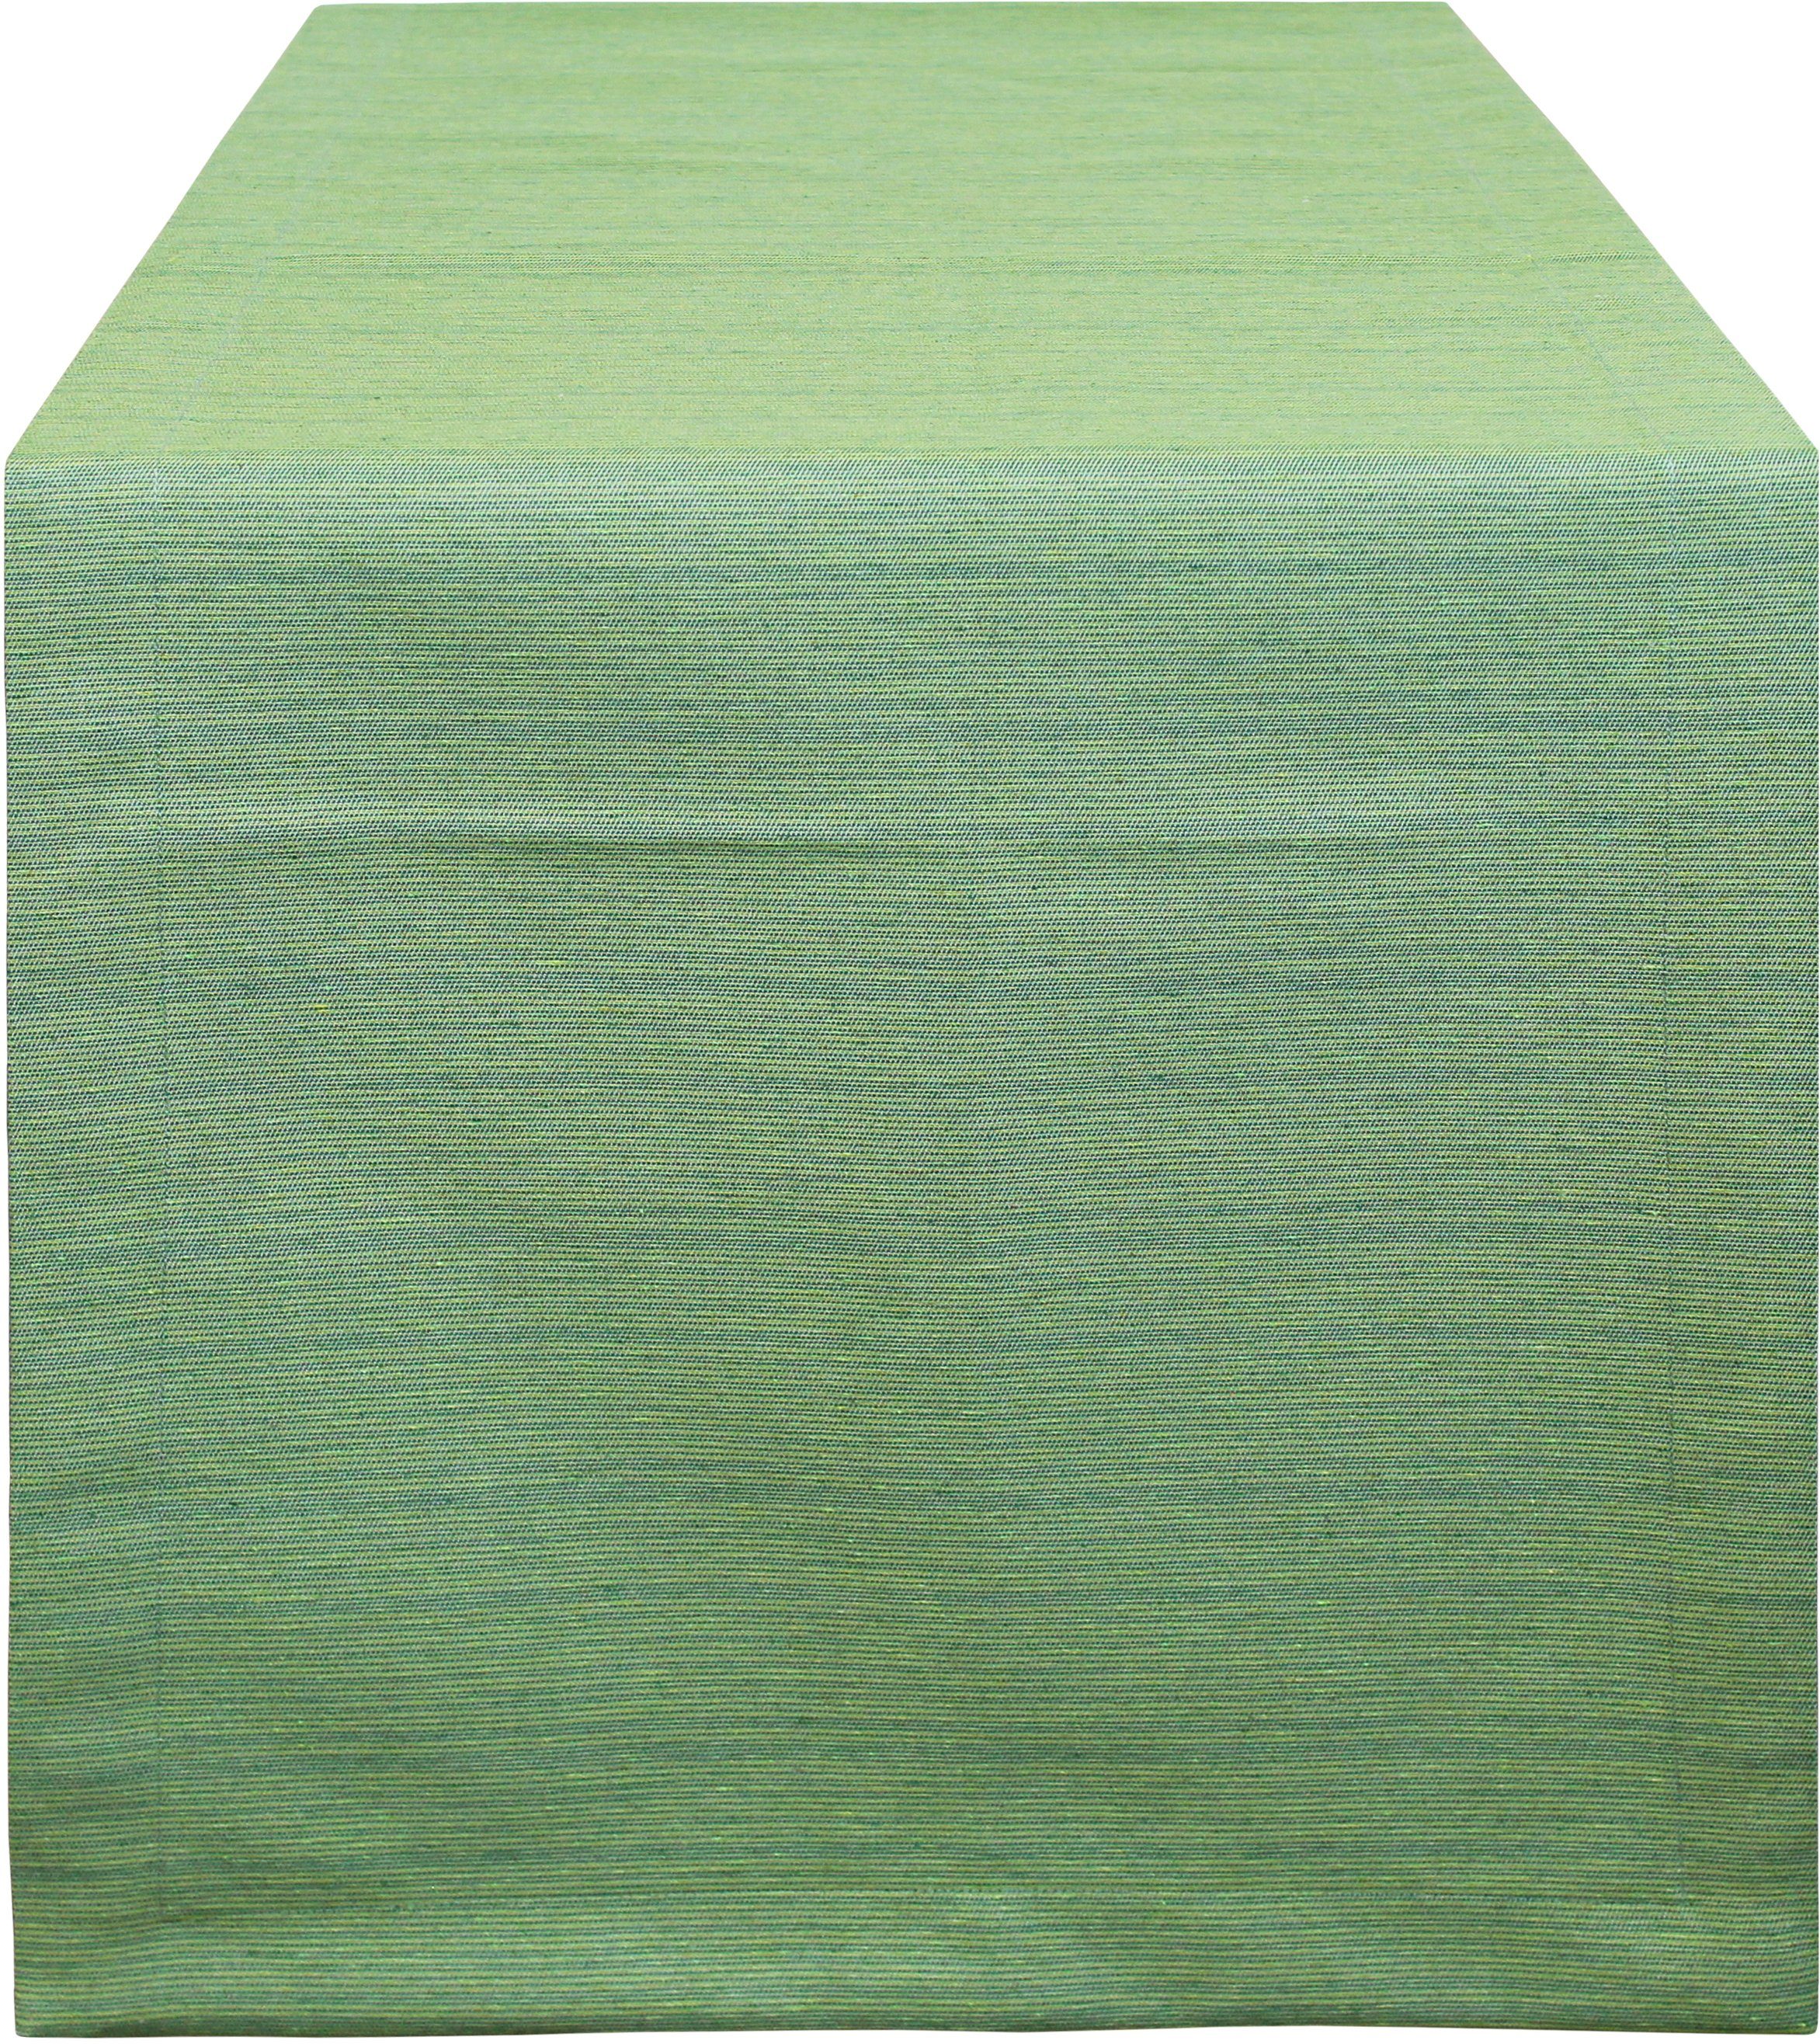 HOSSNER 3267 - HOMECOLLECTION Tischläufer Amalia (1-tlg) grün